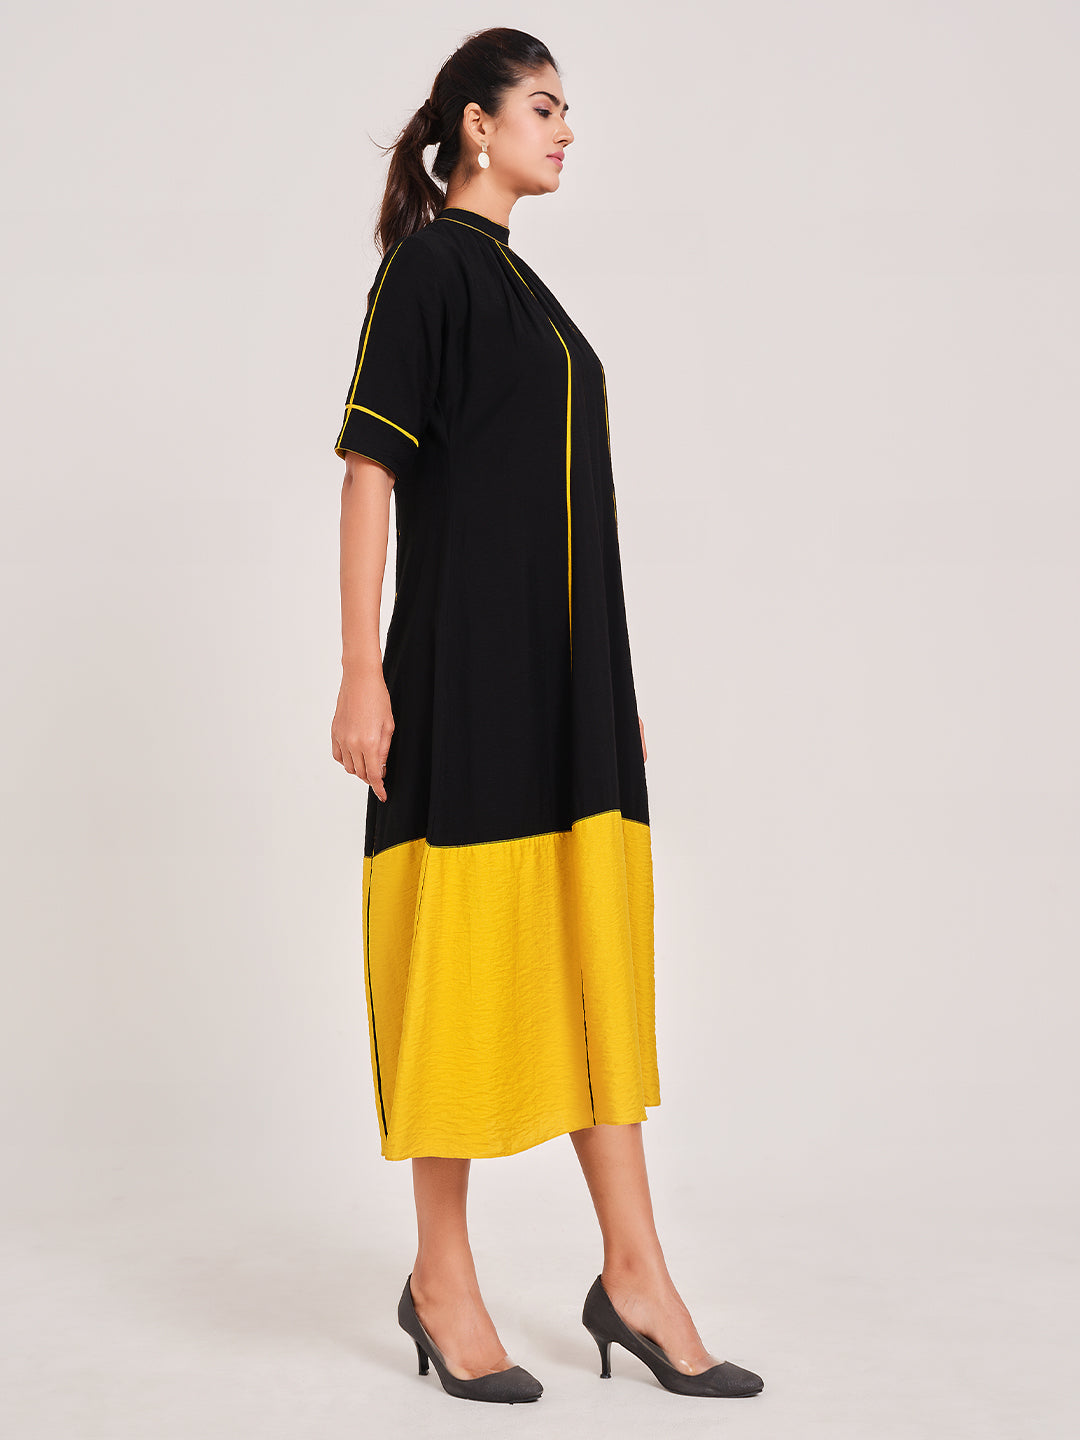 Black And Yellow Colourblock Flared Dress - ARH1019